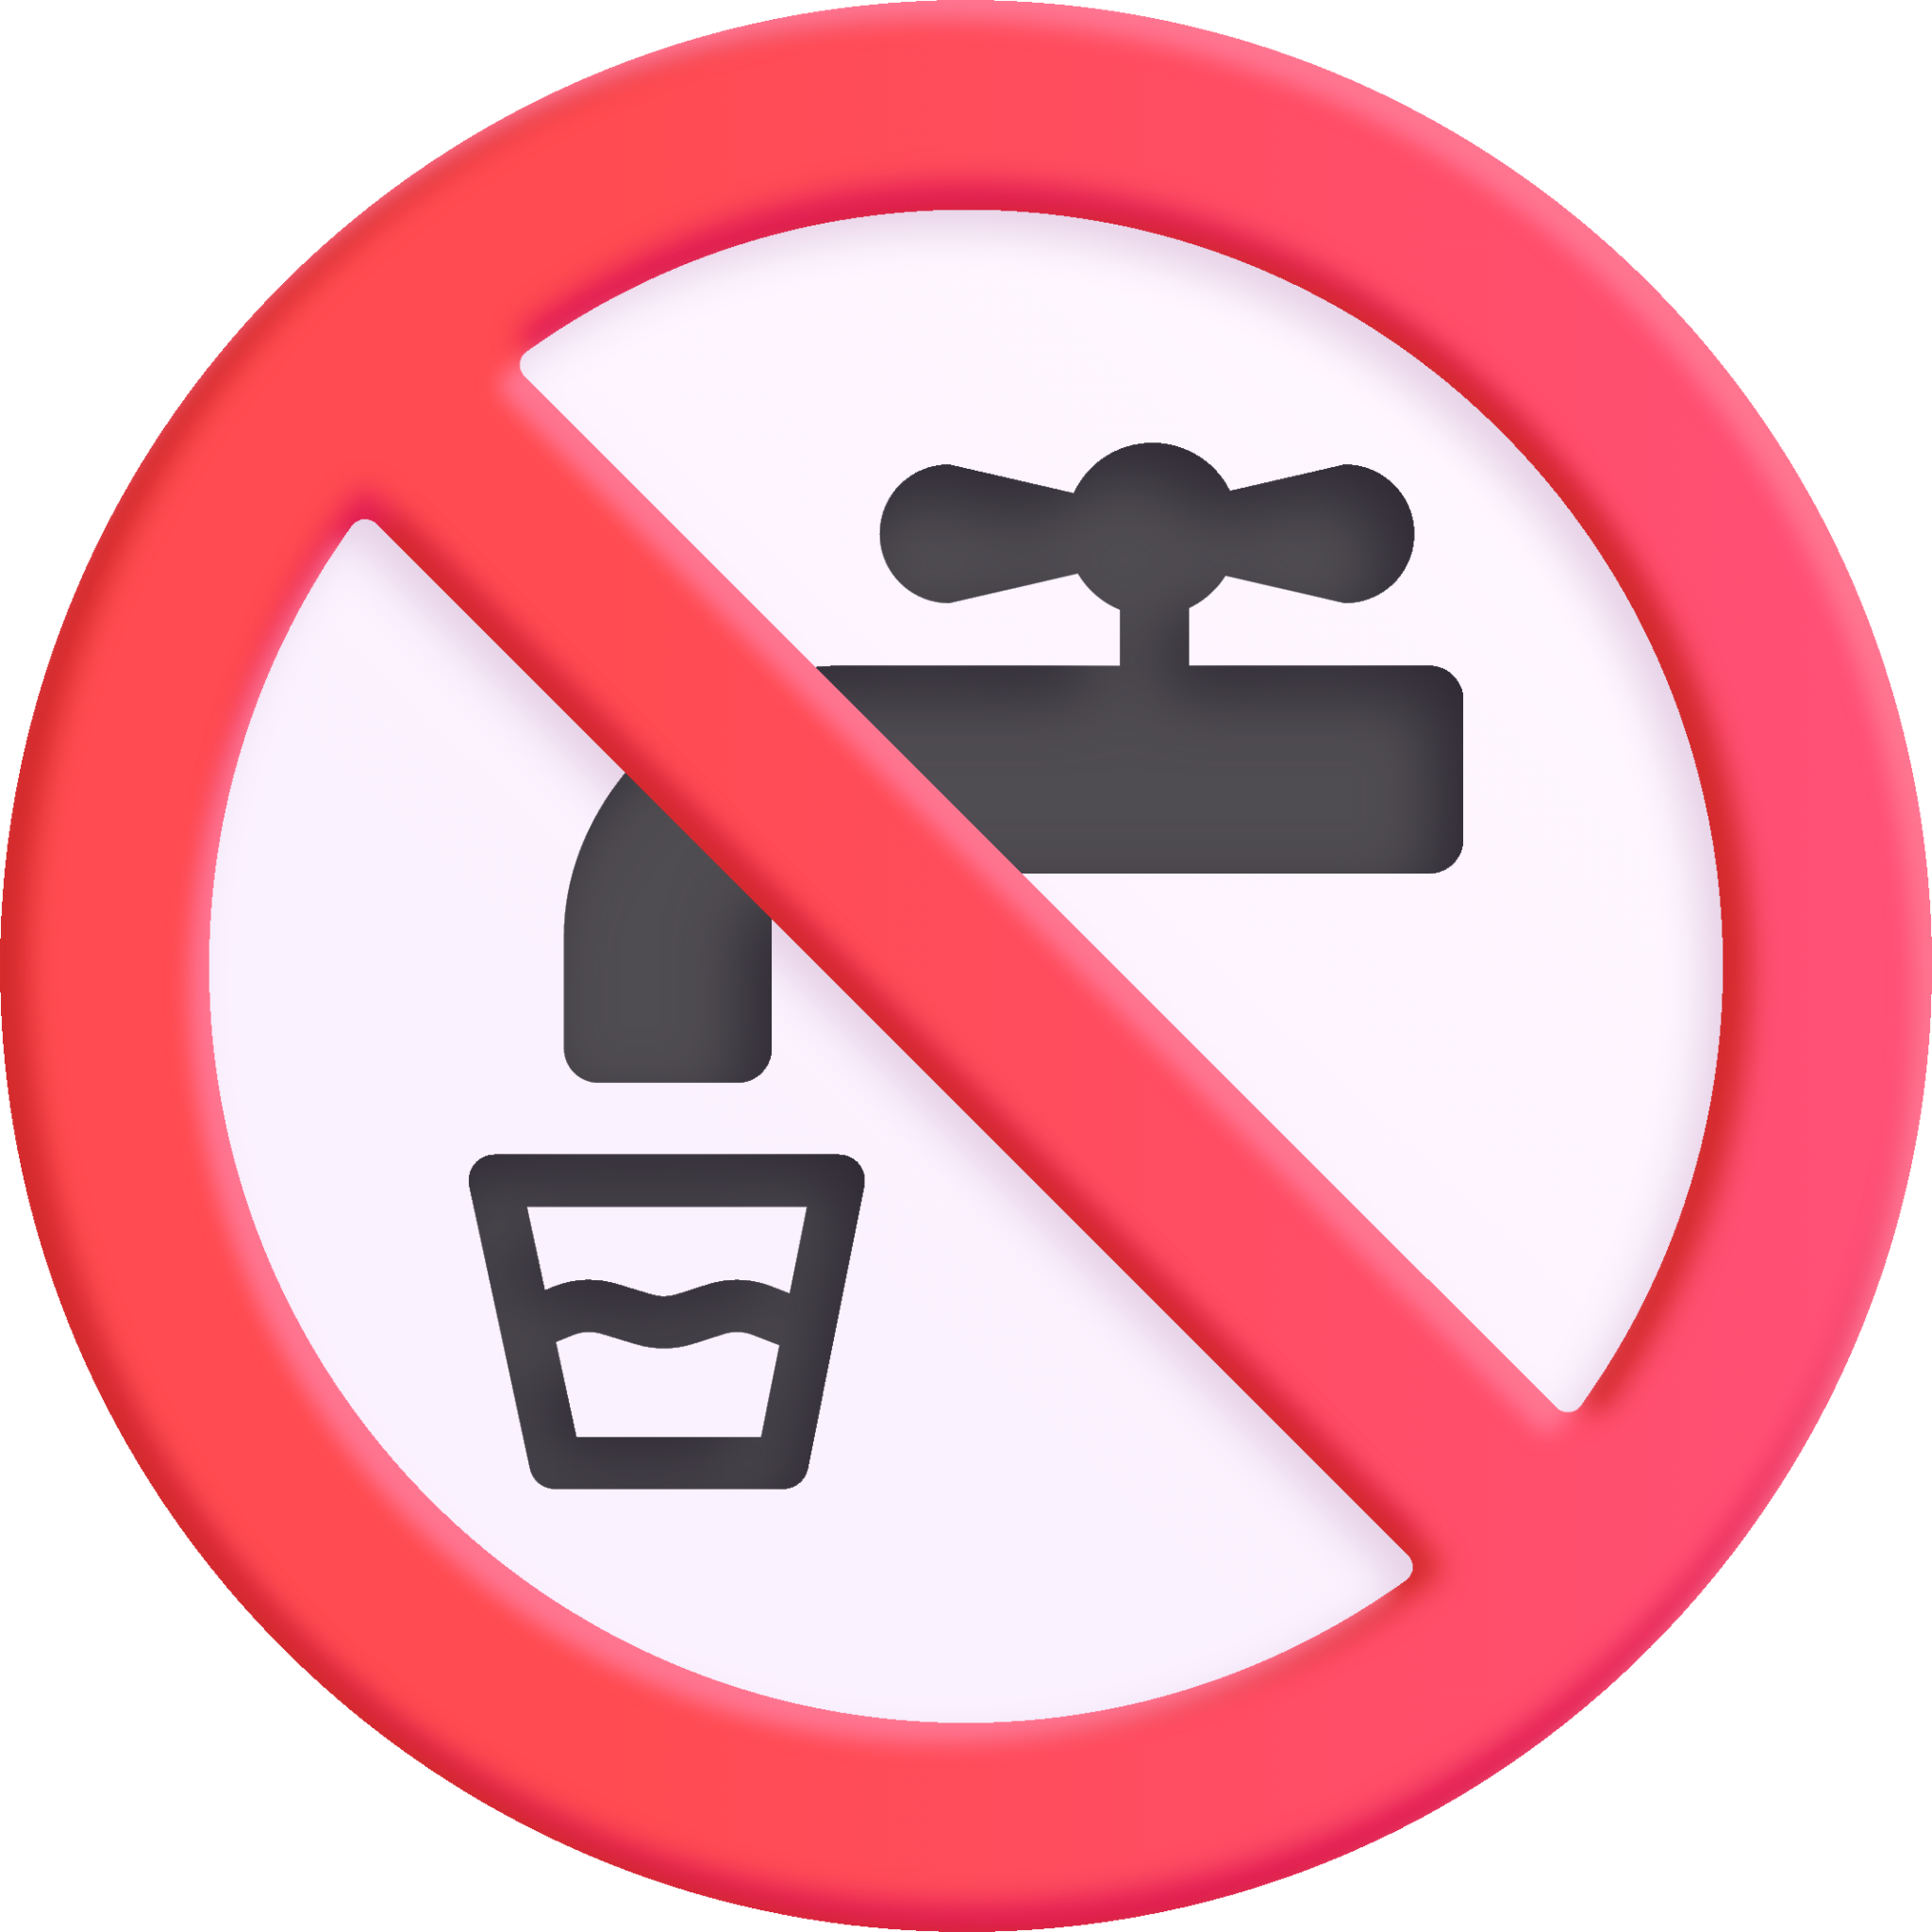 non potable water emoji